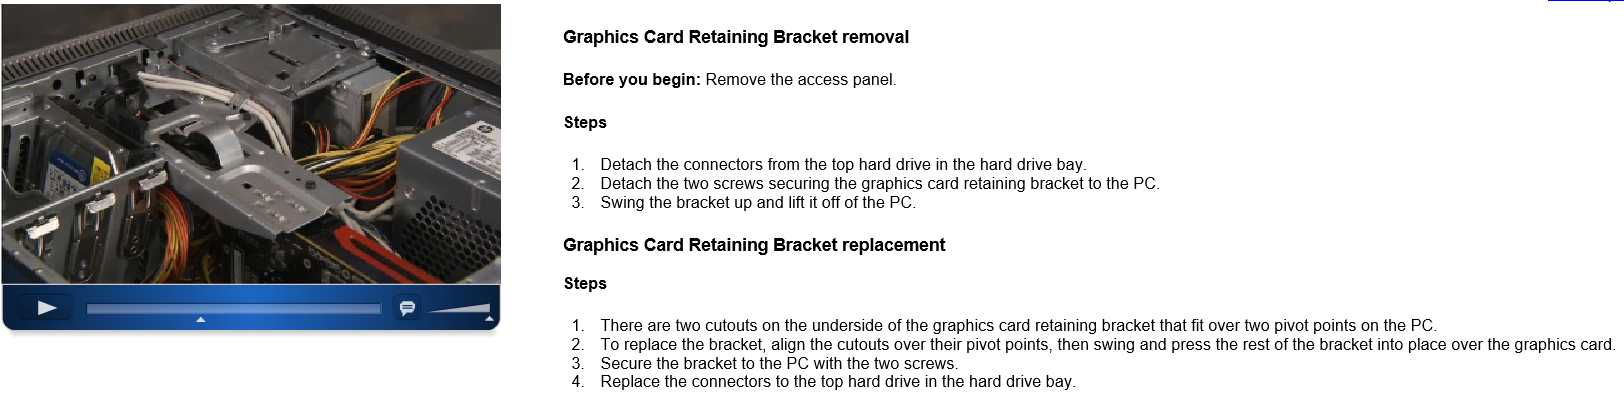 Graphic card retaining bracket removal.jpg